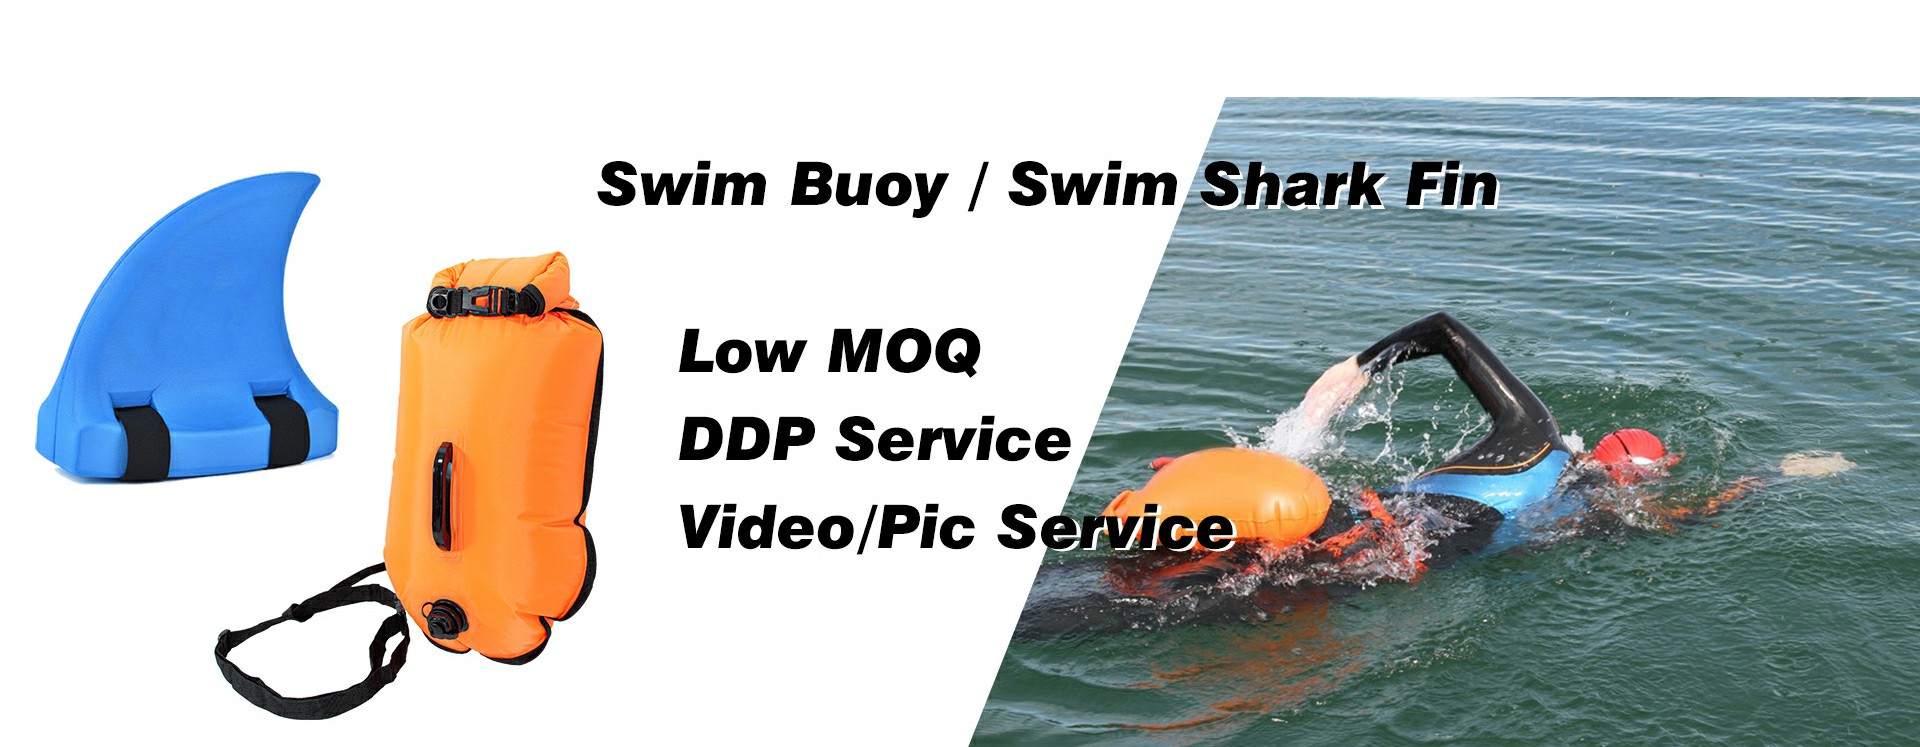 <h2>Swim Buoy / Swim Shark Fin</h2><br/>Low MOQ, DDP Service, Video/Photo Service